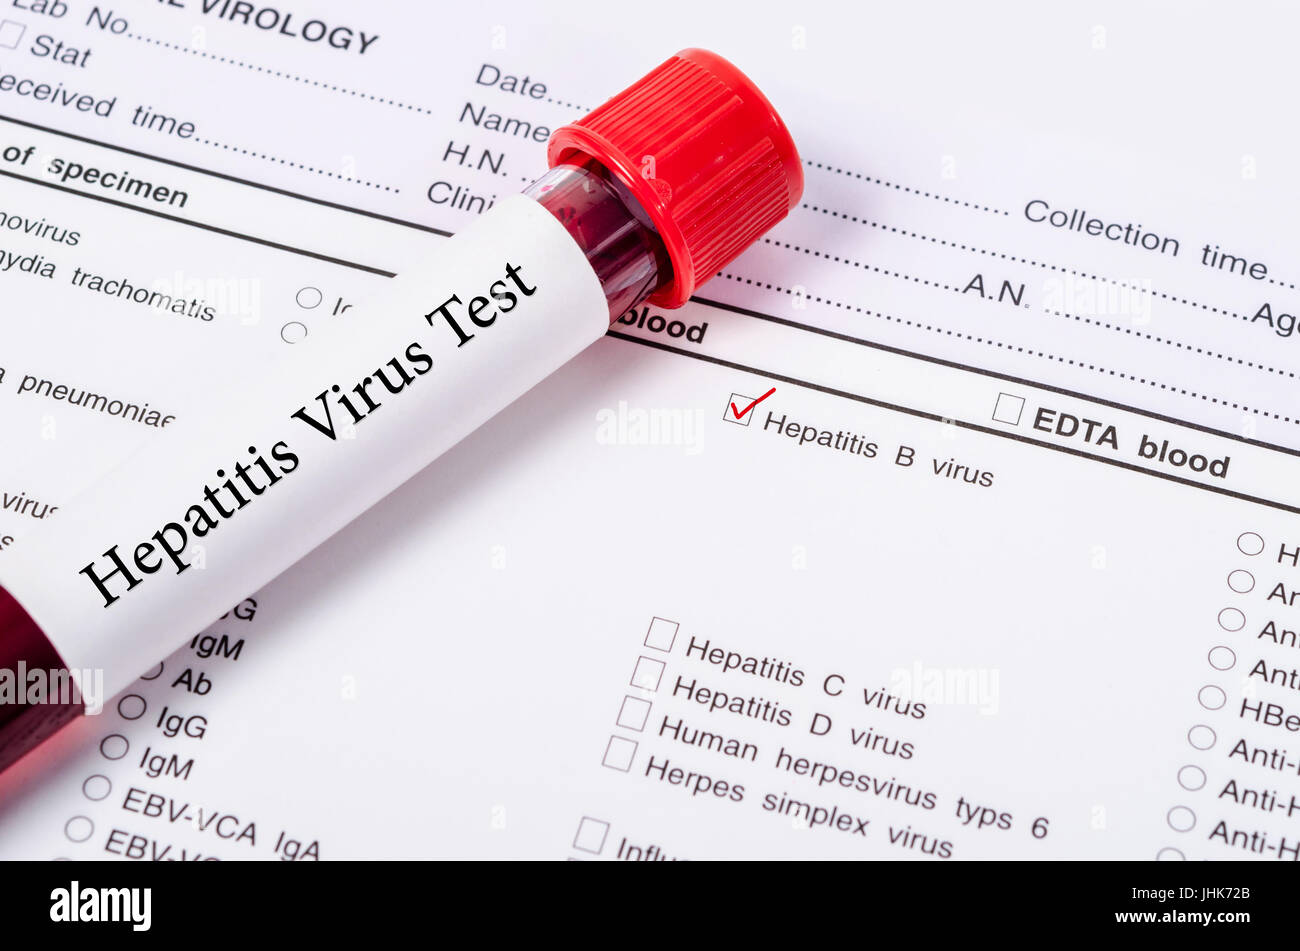 Blood Sample For Hepatitis B Virus Hbv Testingl On Request Form Screening Test Stock Photo Alamy